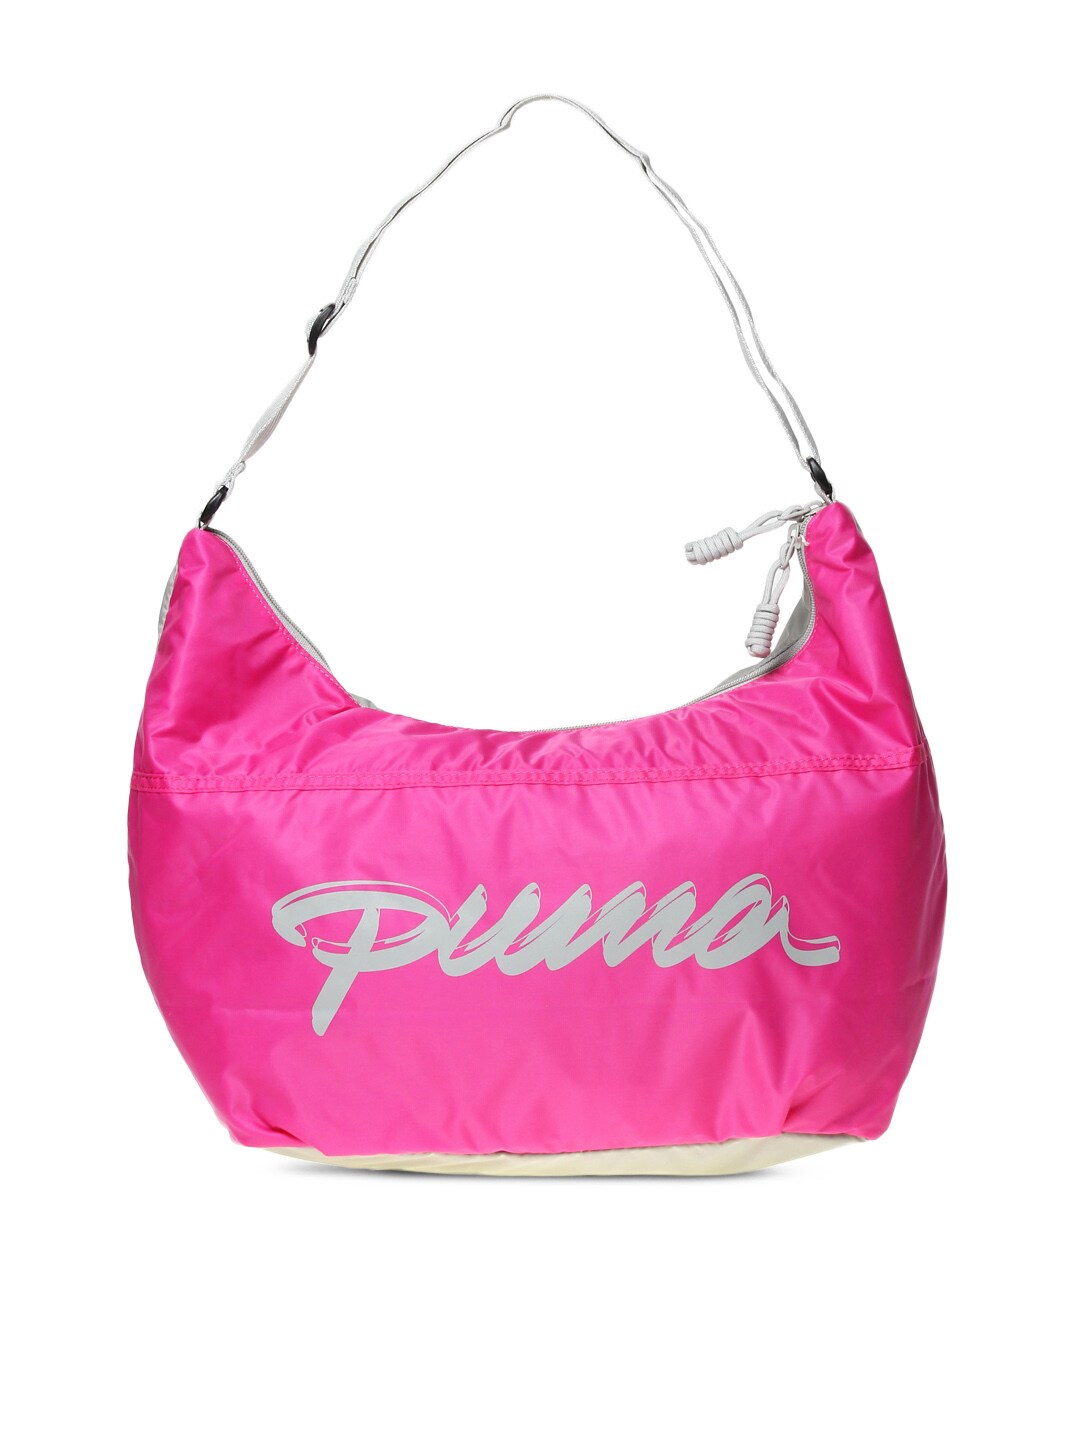 Puma Women Pink & Grey Bag